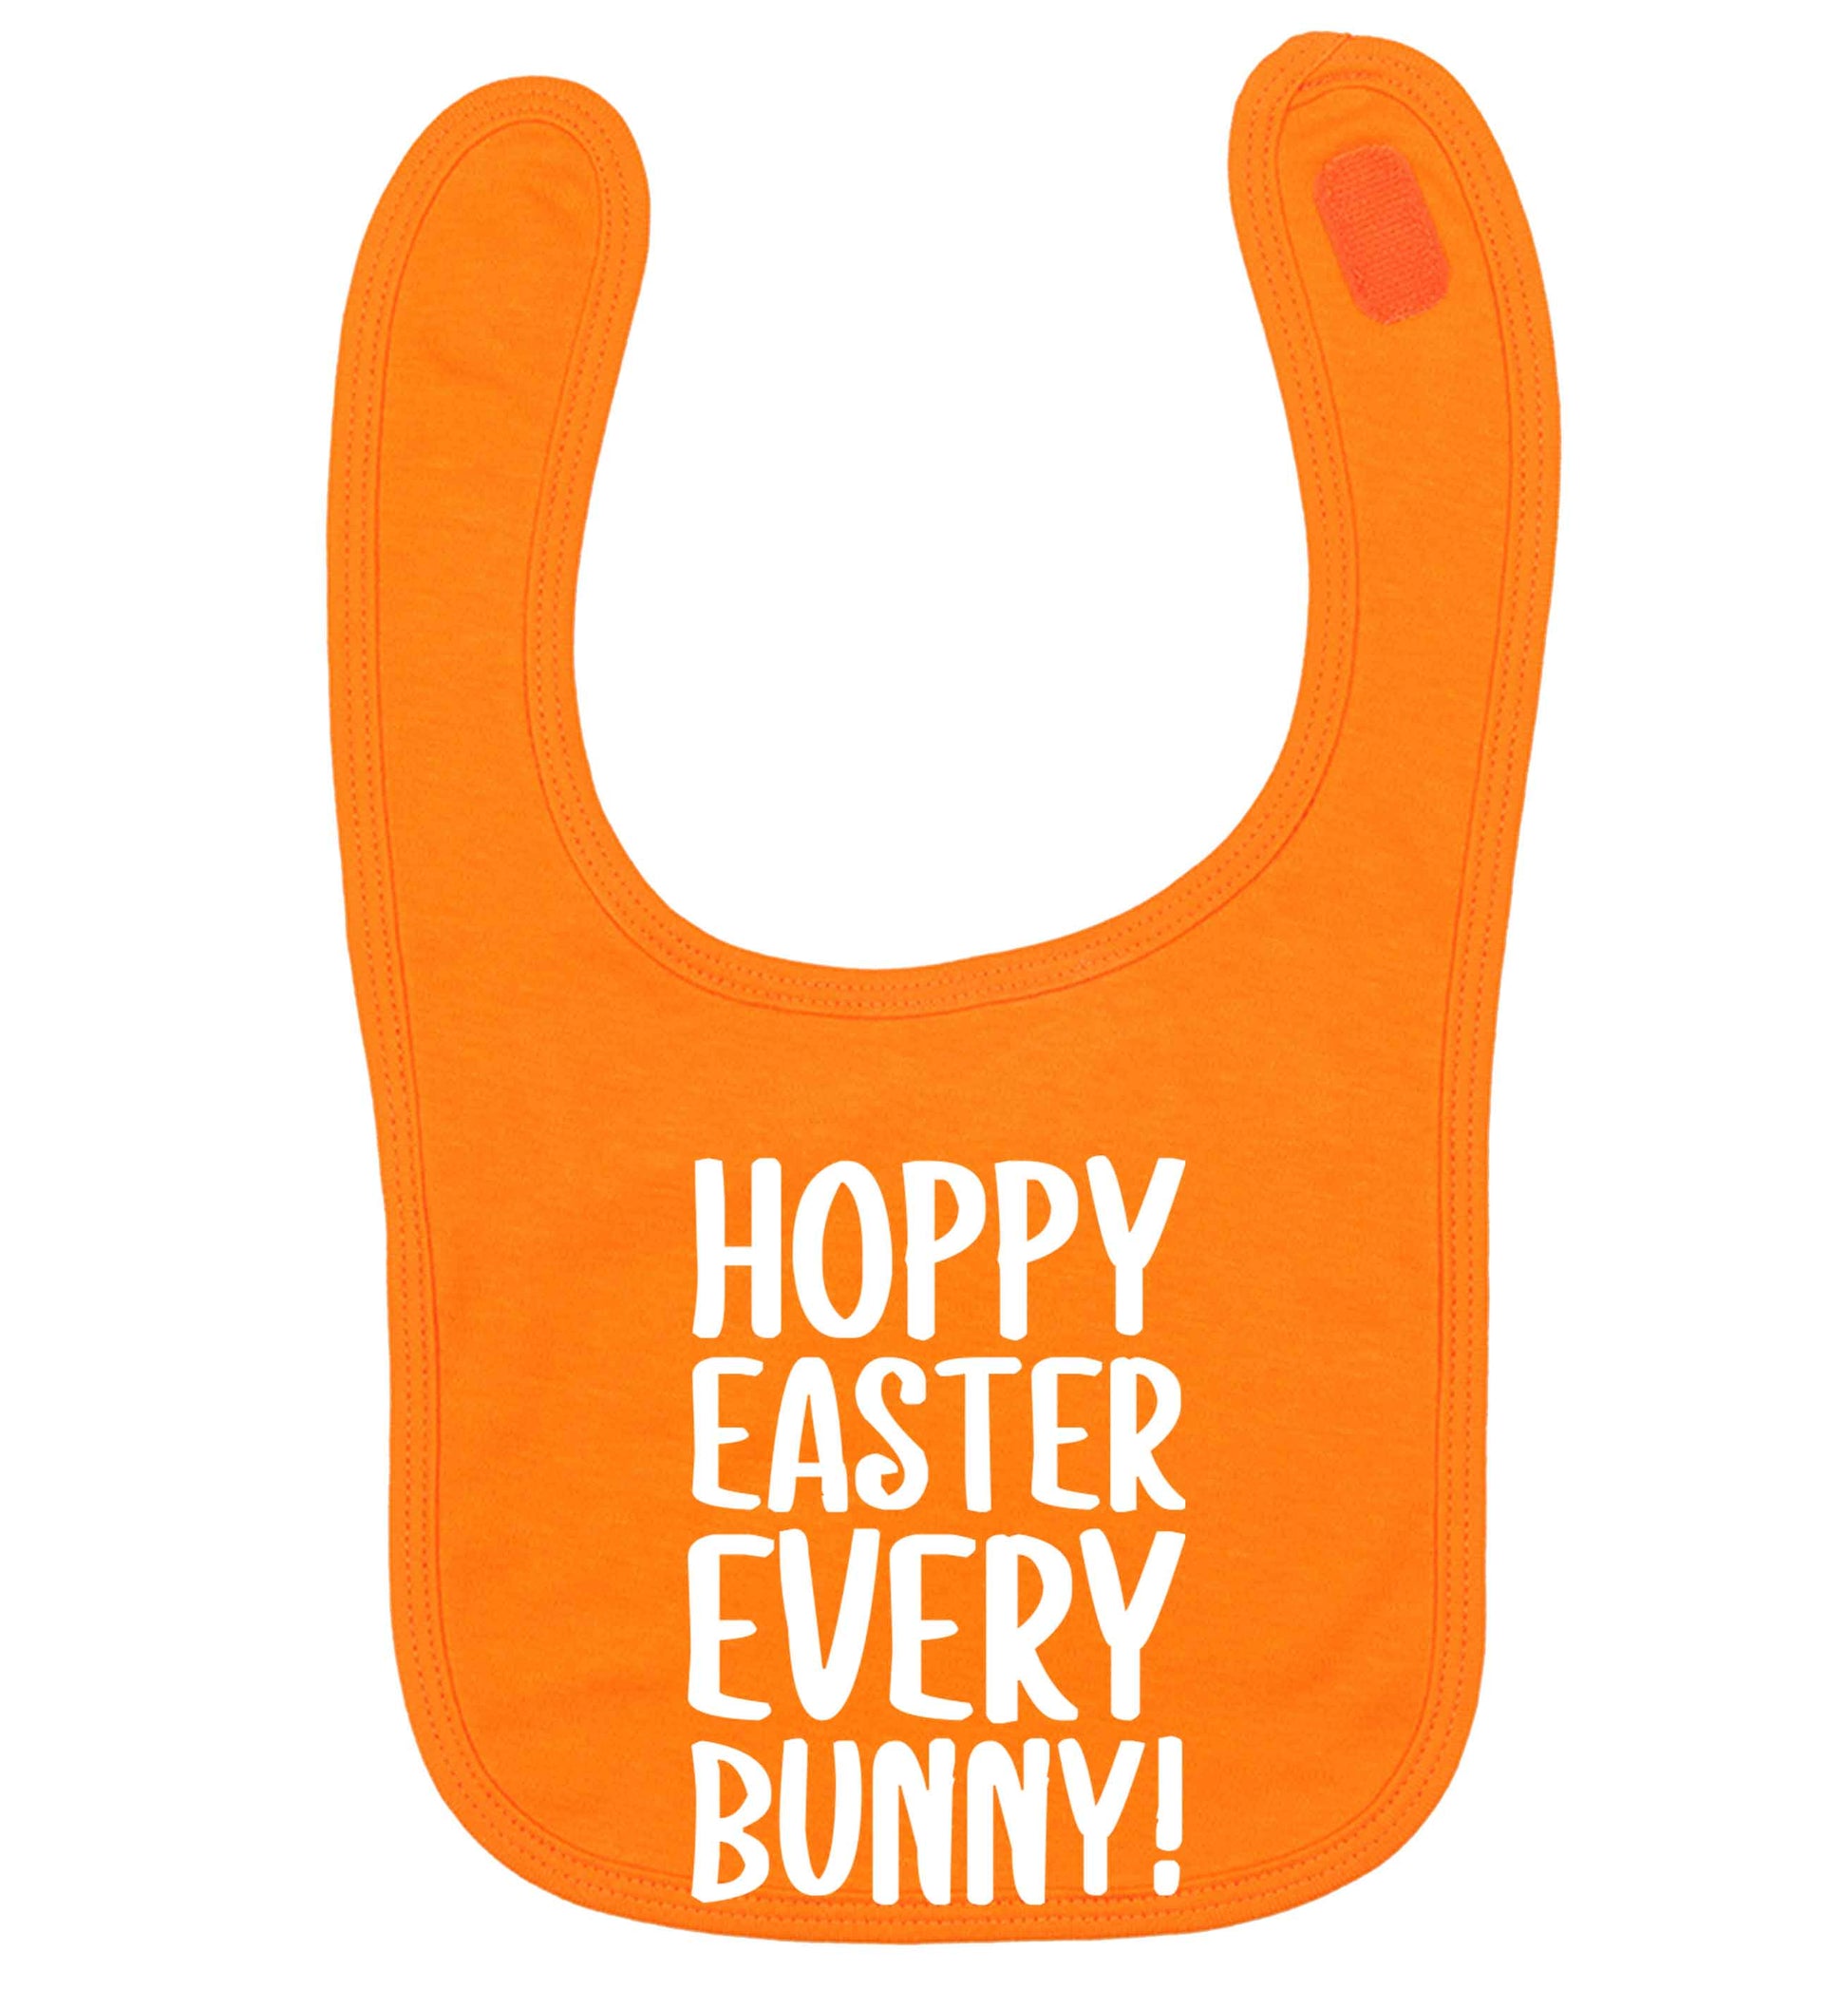 Hoppy Easter every bunny! orange baby bib